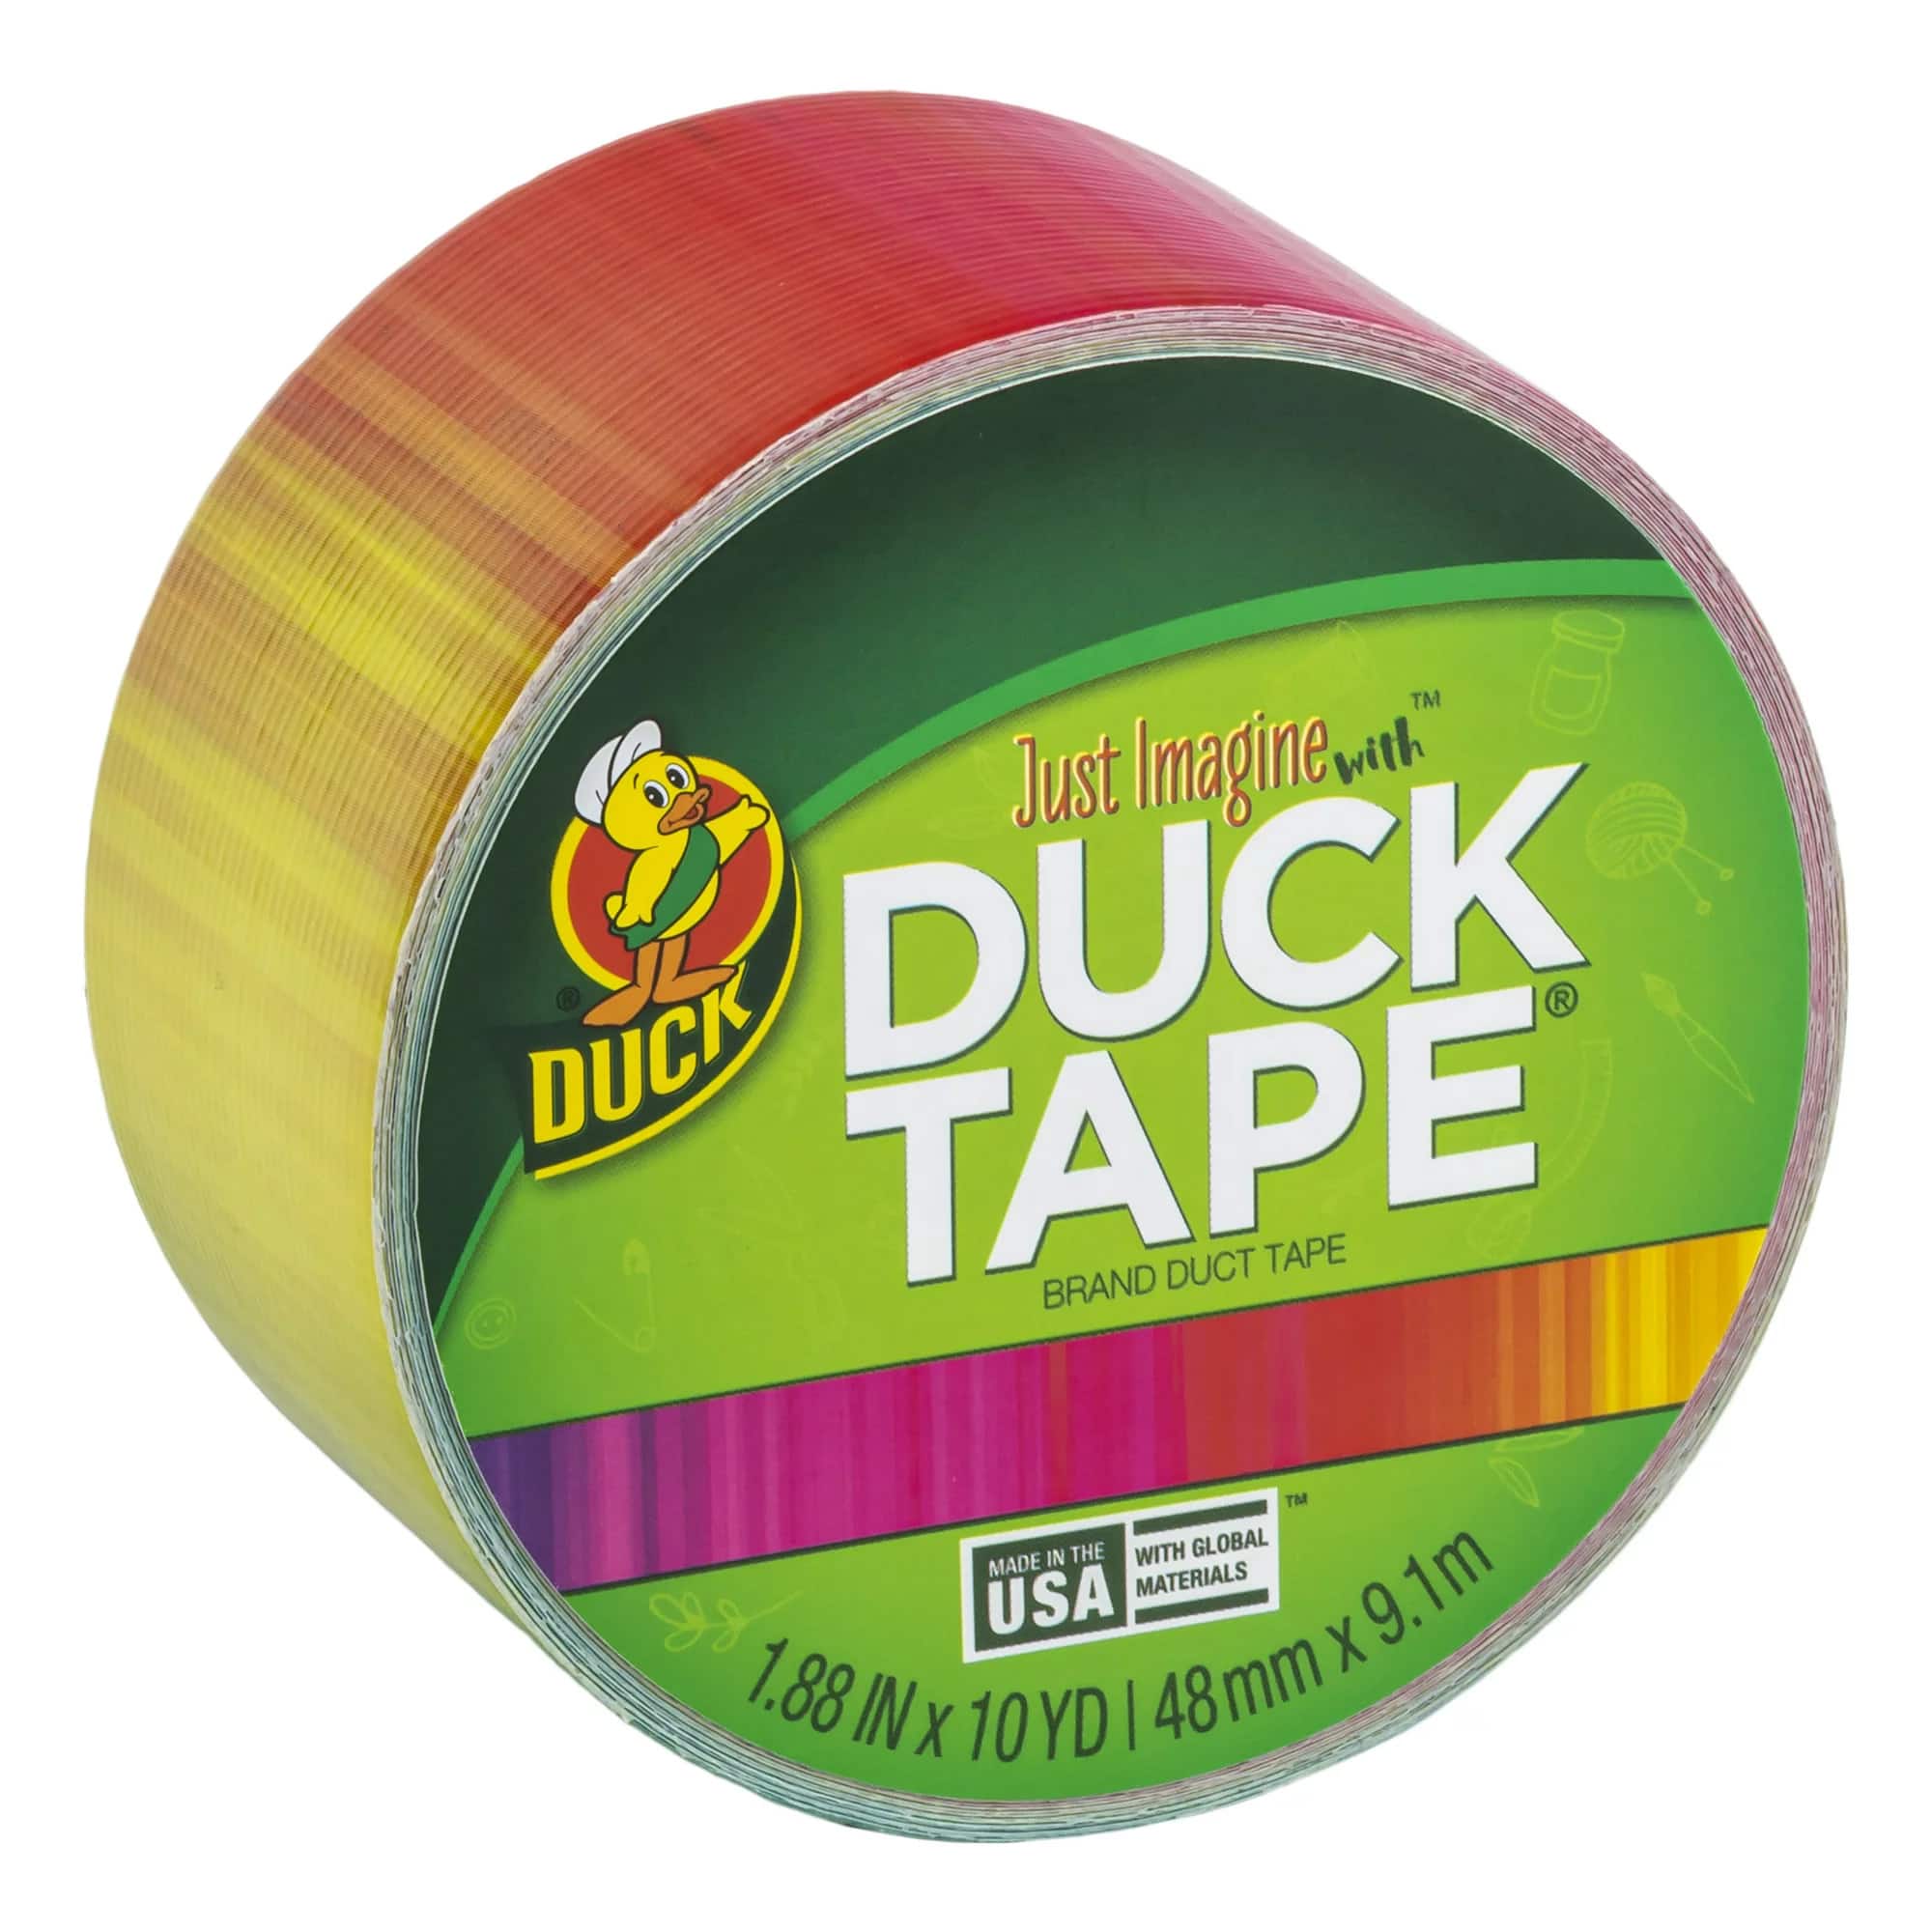 Duck 1.88 x 10 yd. Rainbow Duct Tape